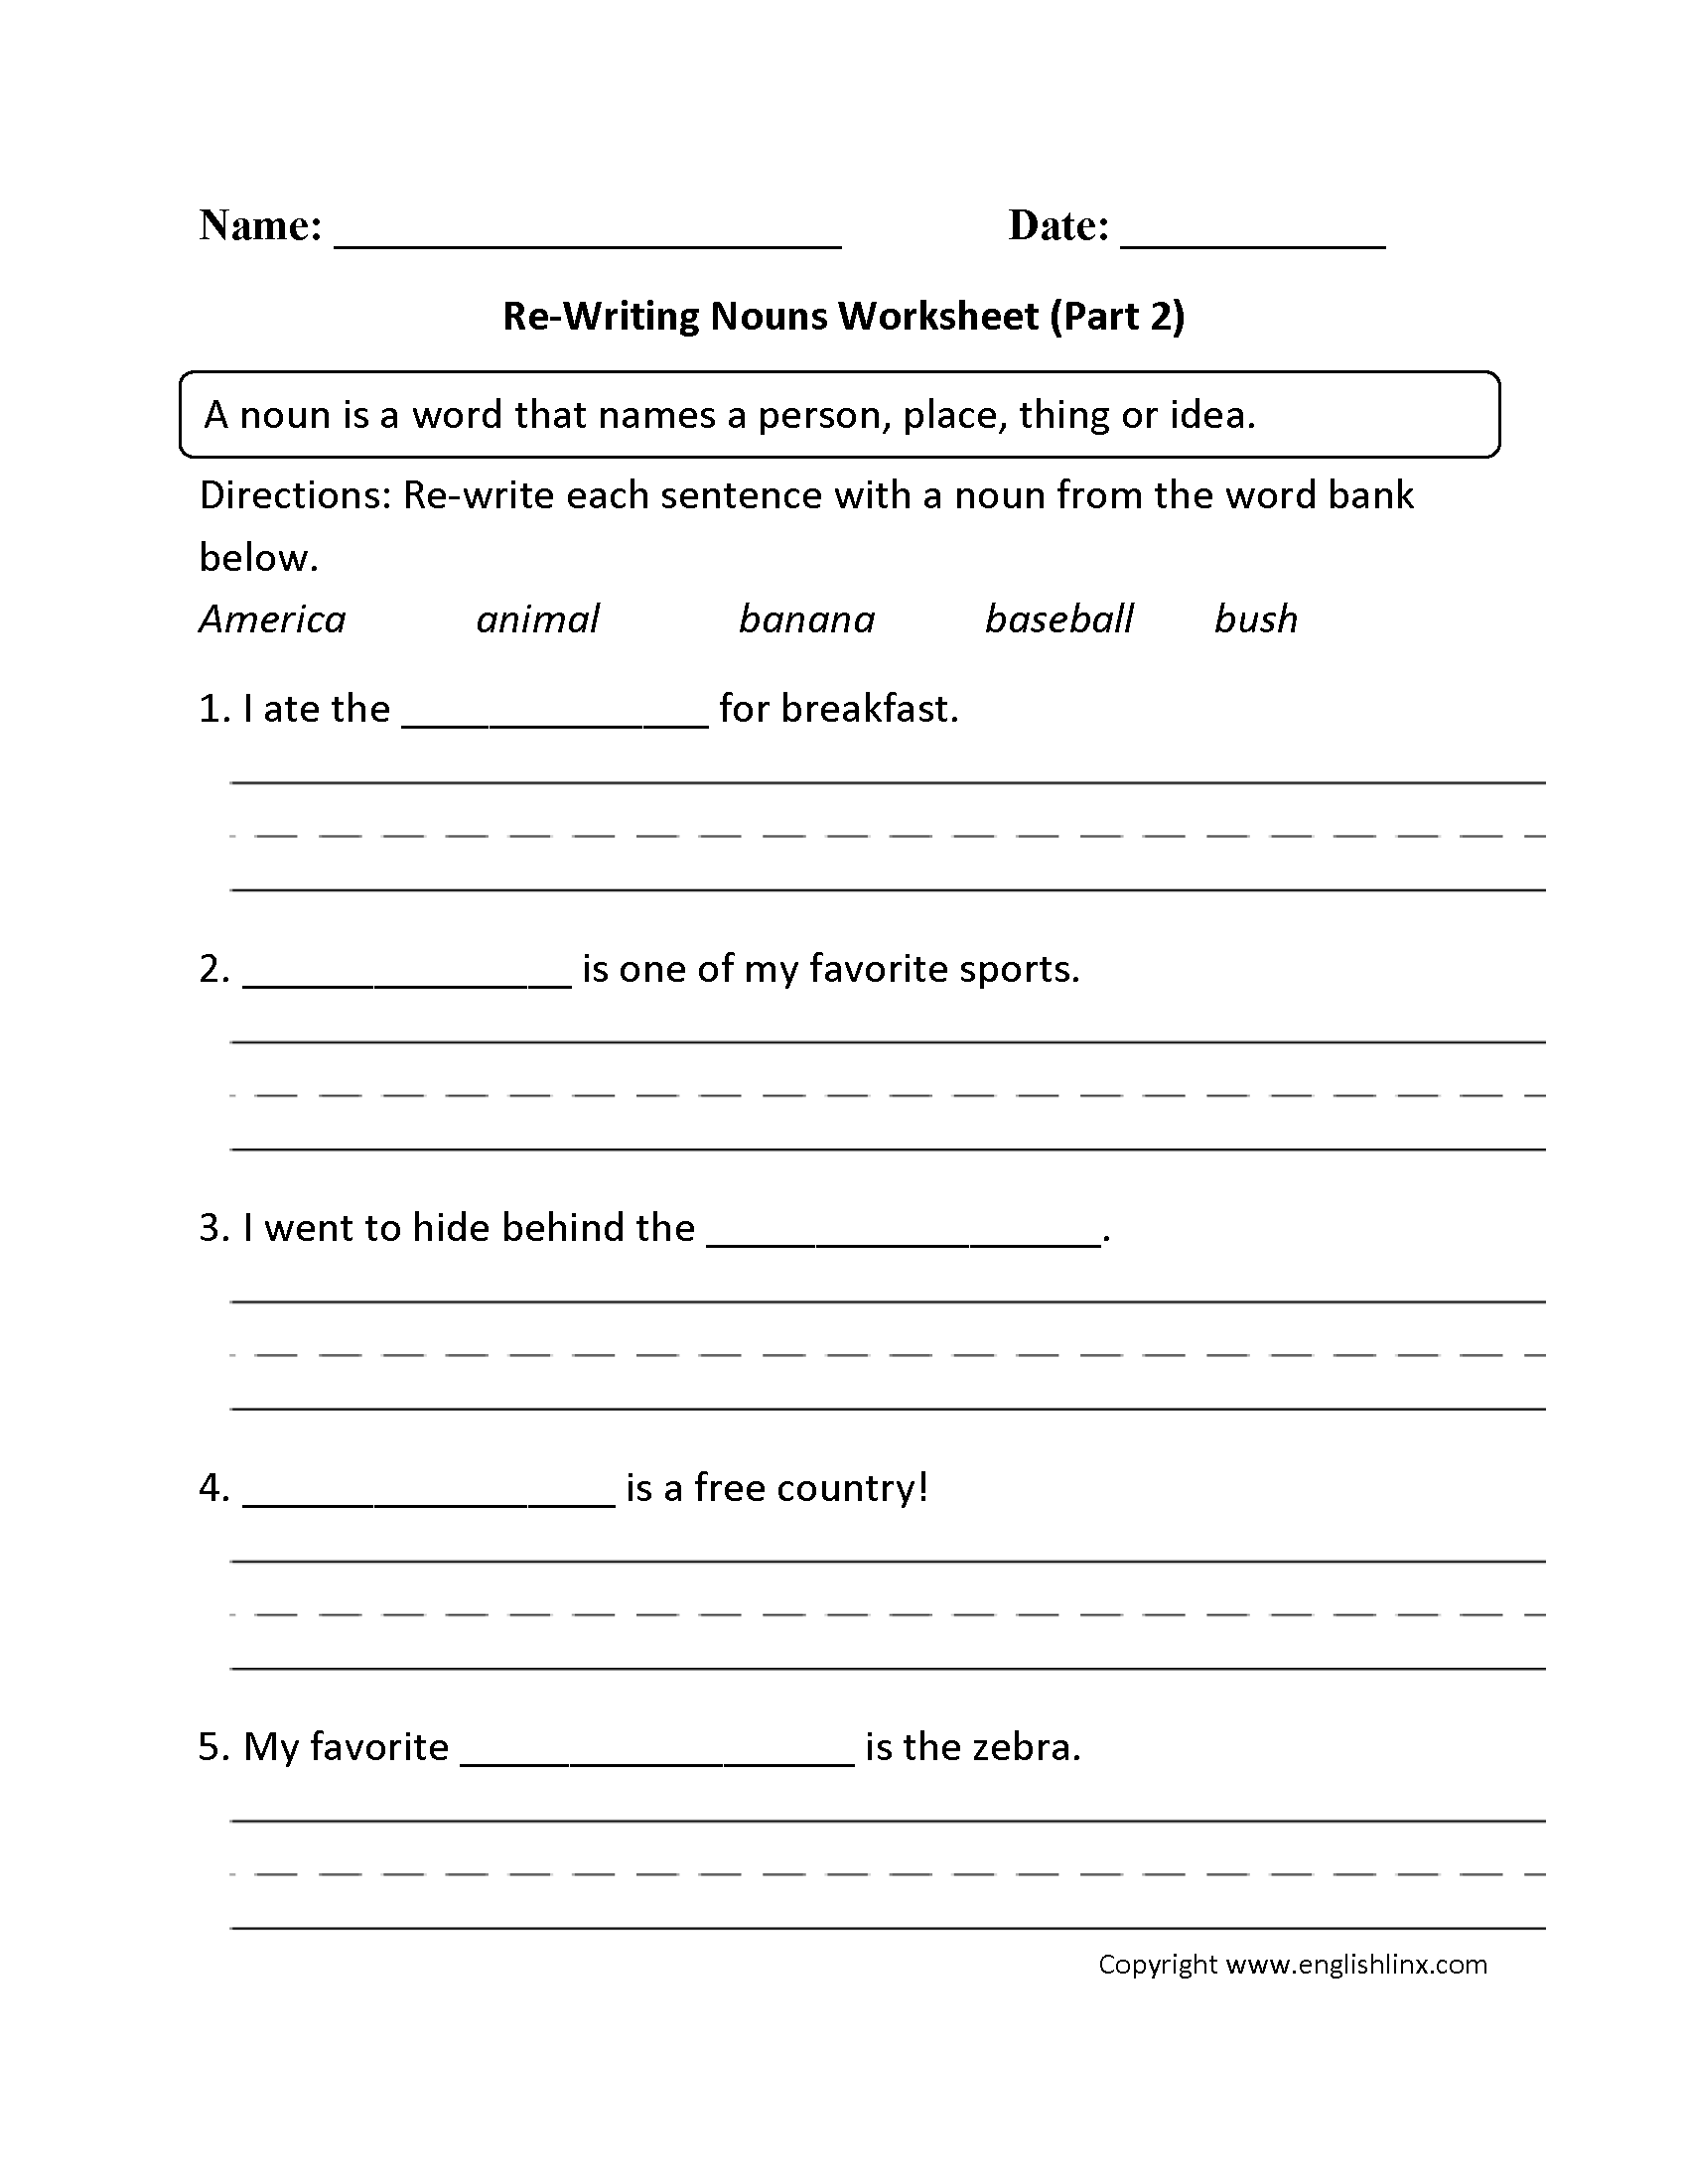 Re-Writing Nouns Worksheet Part 2